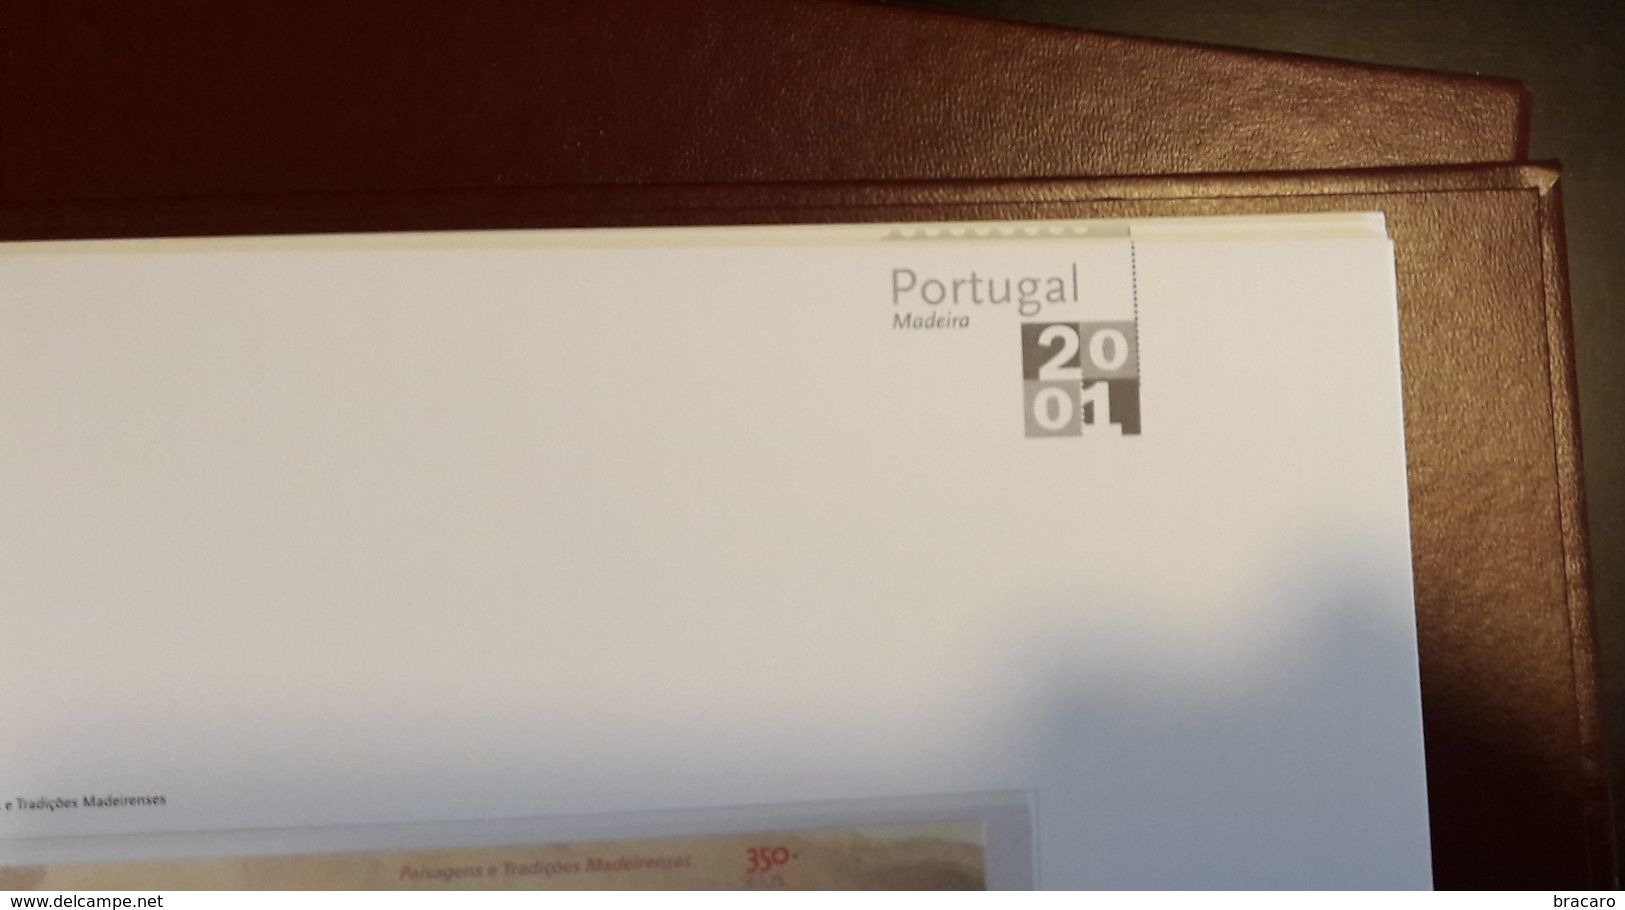 PORTUGAL - ÁLBUM FILATÉLICO - full year stamps + blocks + ATM / machine stamps - MNH - 2008